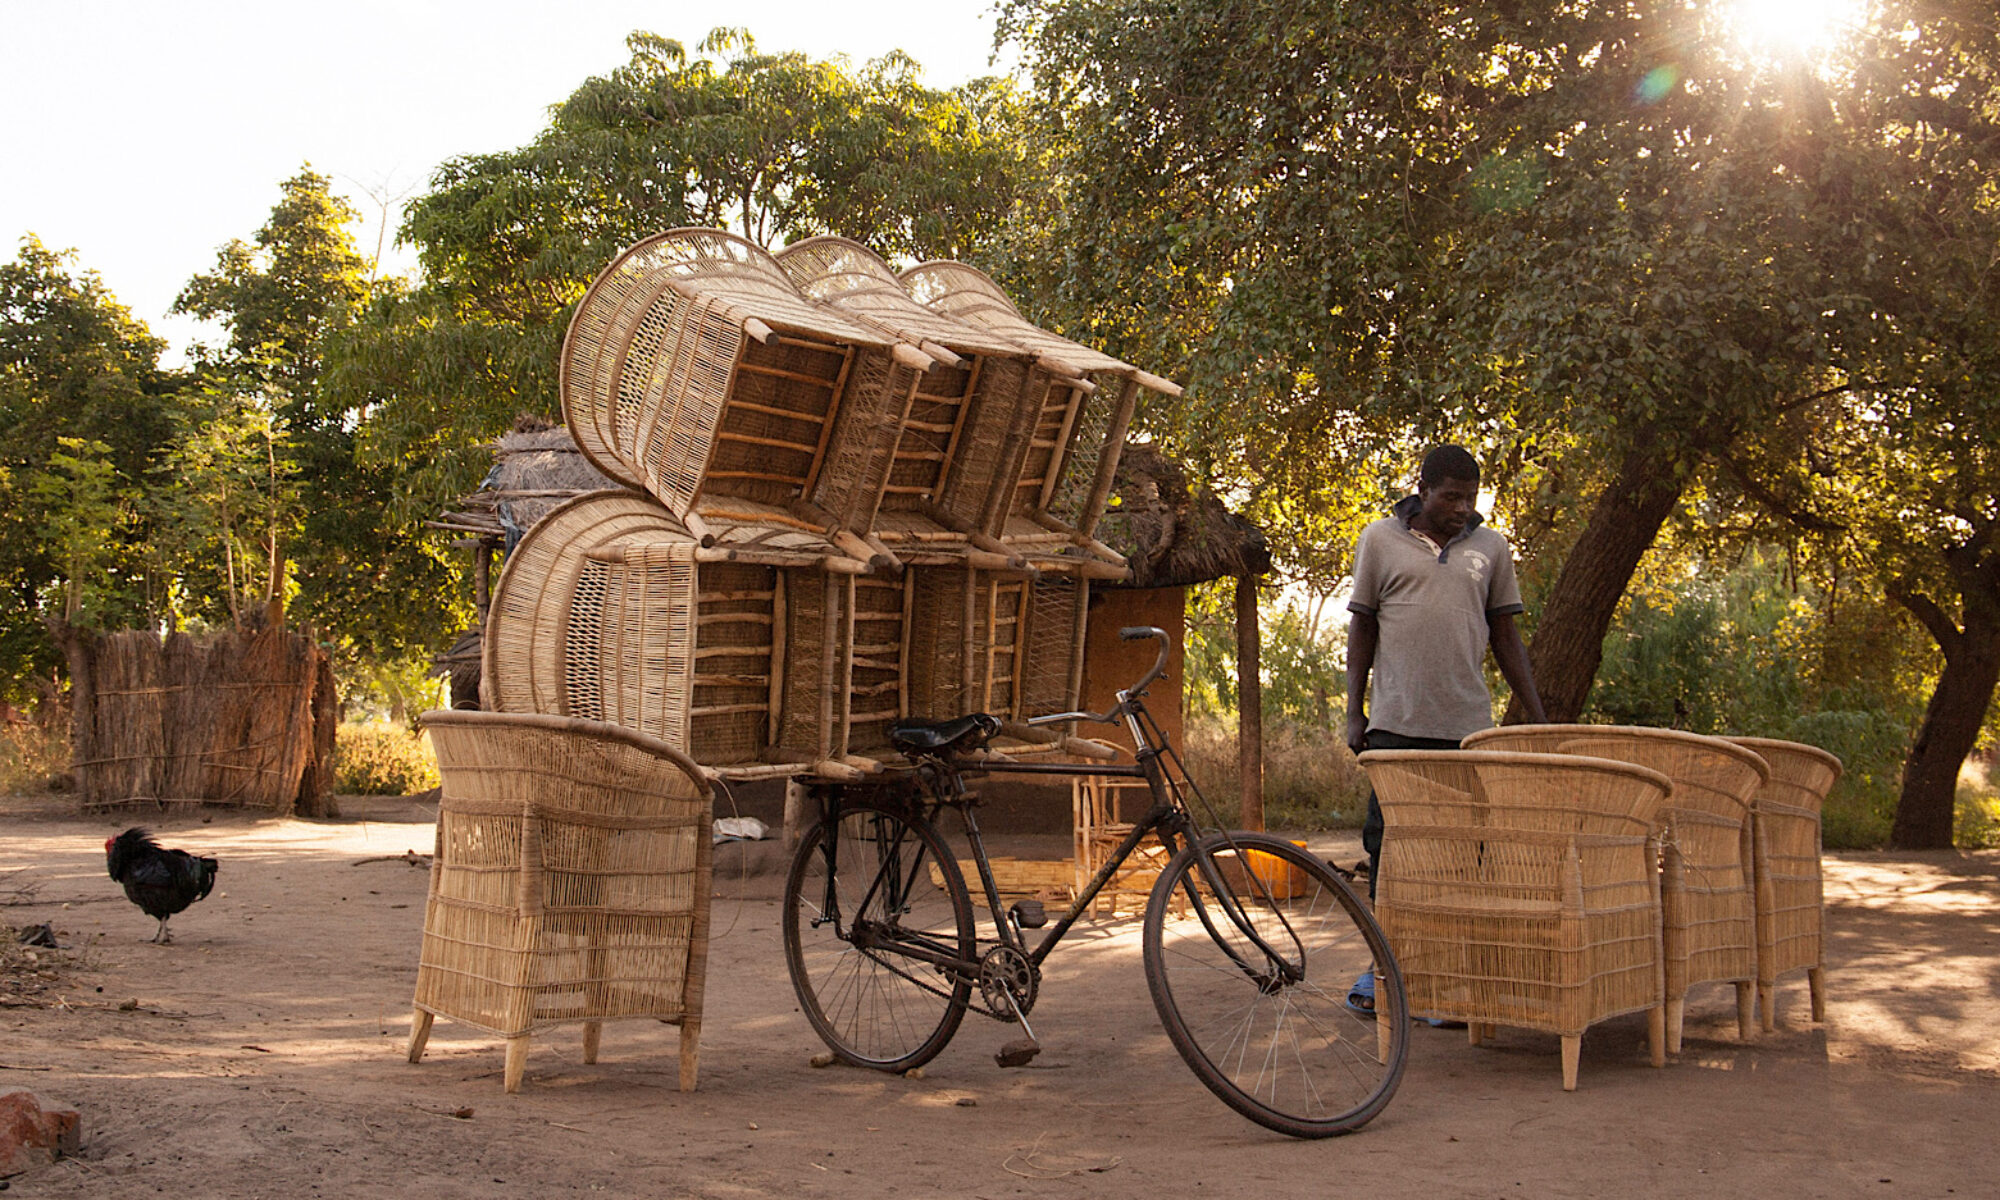 Traditional Malawi Cane Chair